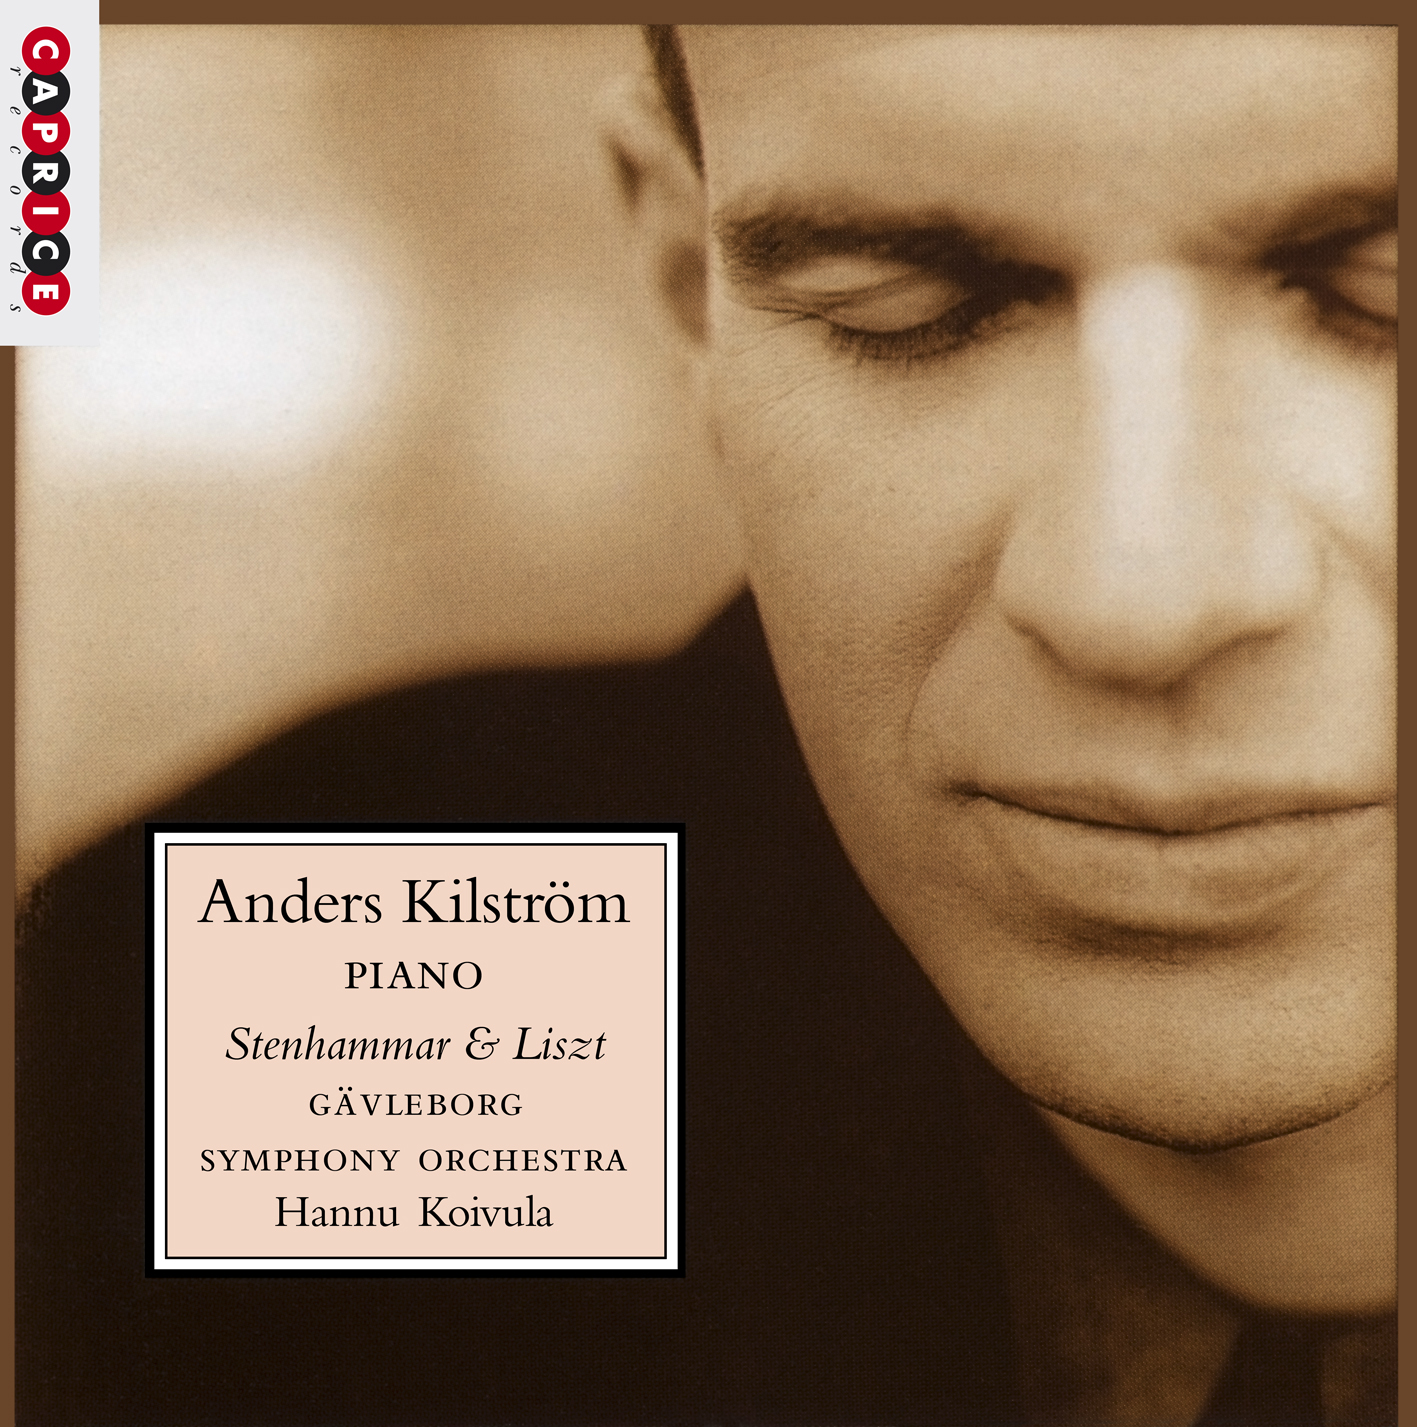 Anders Kilström, piano